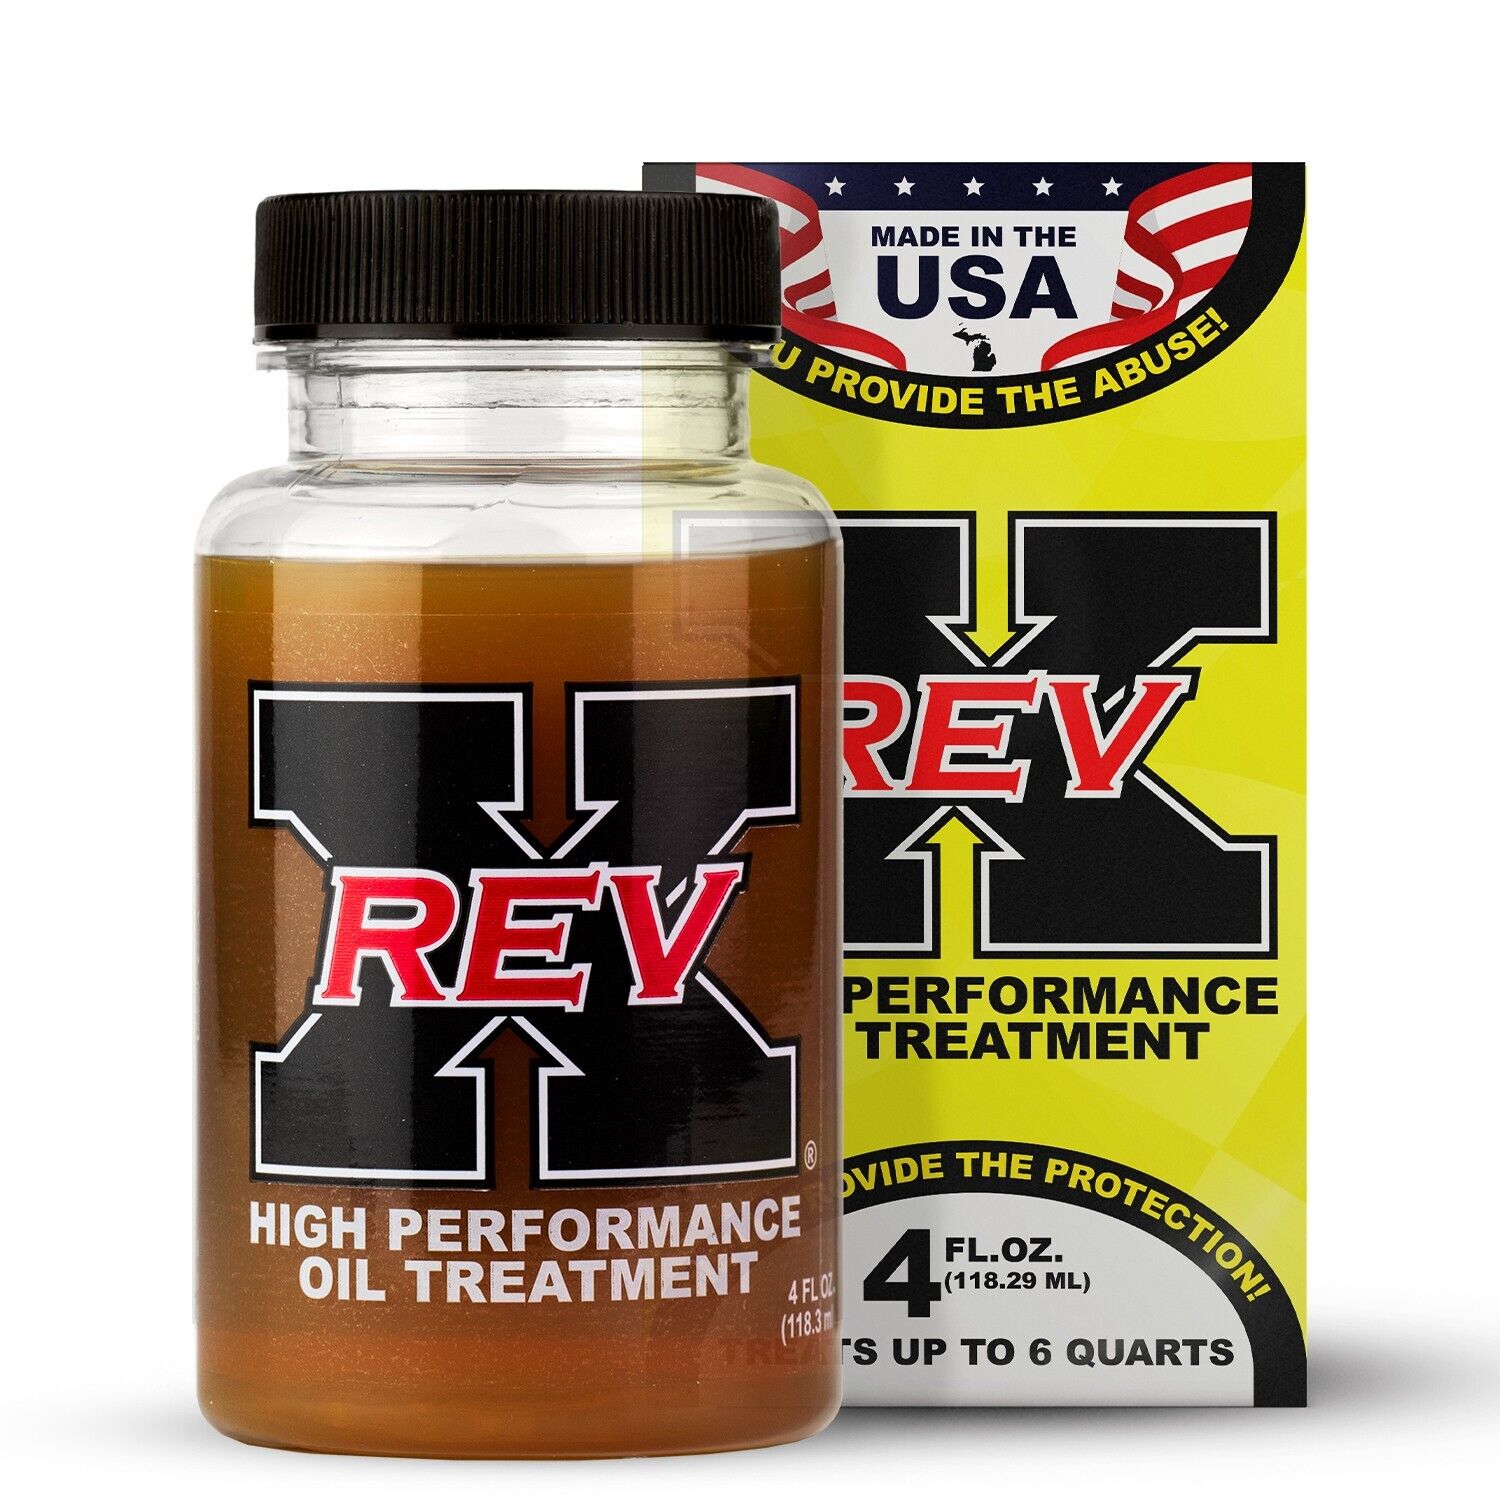 REV X High-Performance Oil Treatment - 4 fl. oz. For Diesel or Gas Engines